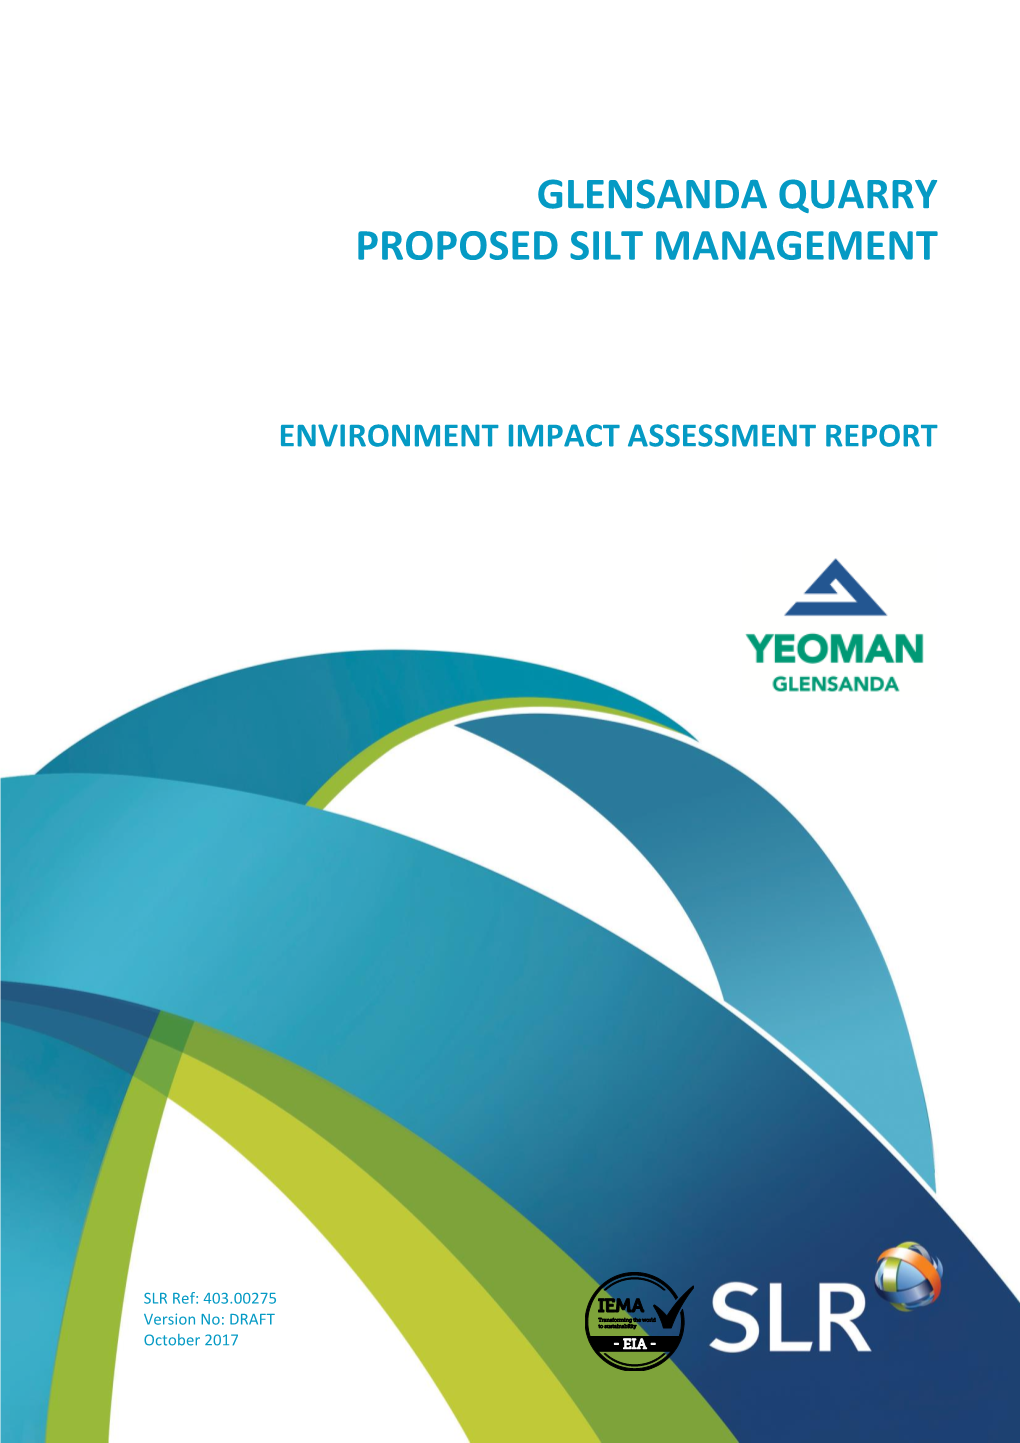 Glensanda Quarry Proposed Silt Management: Environmental Impact Assessment Report